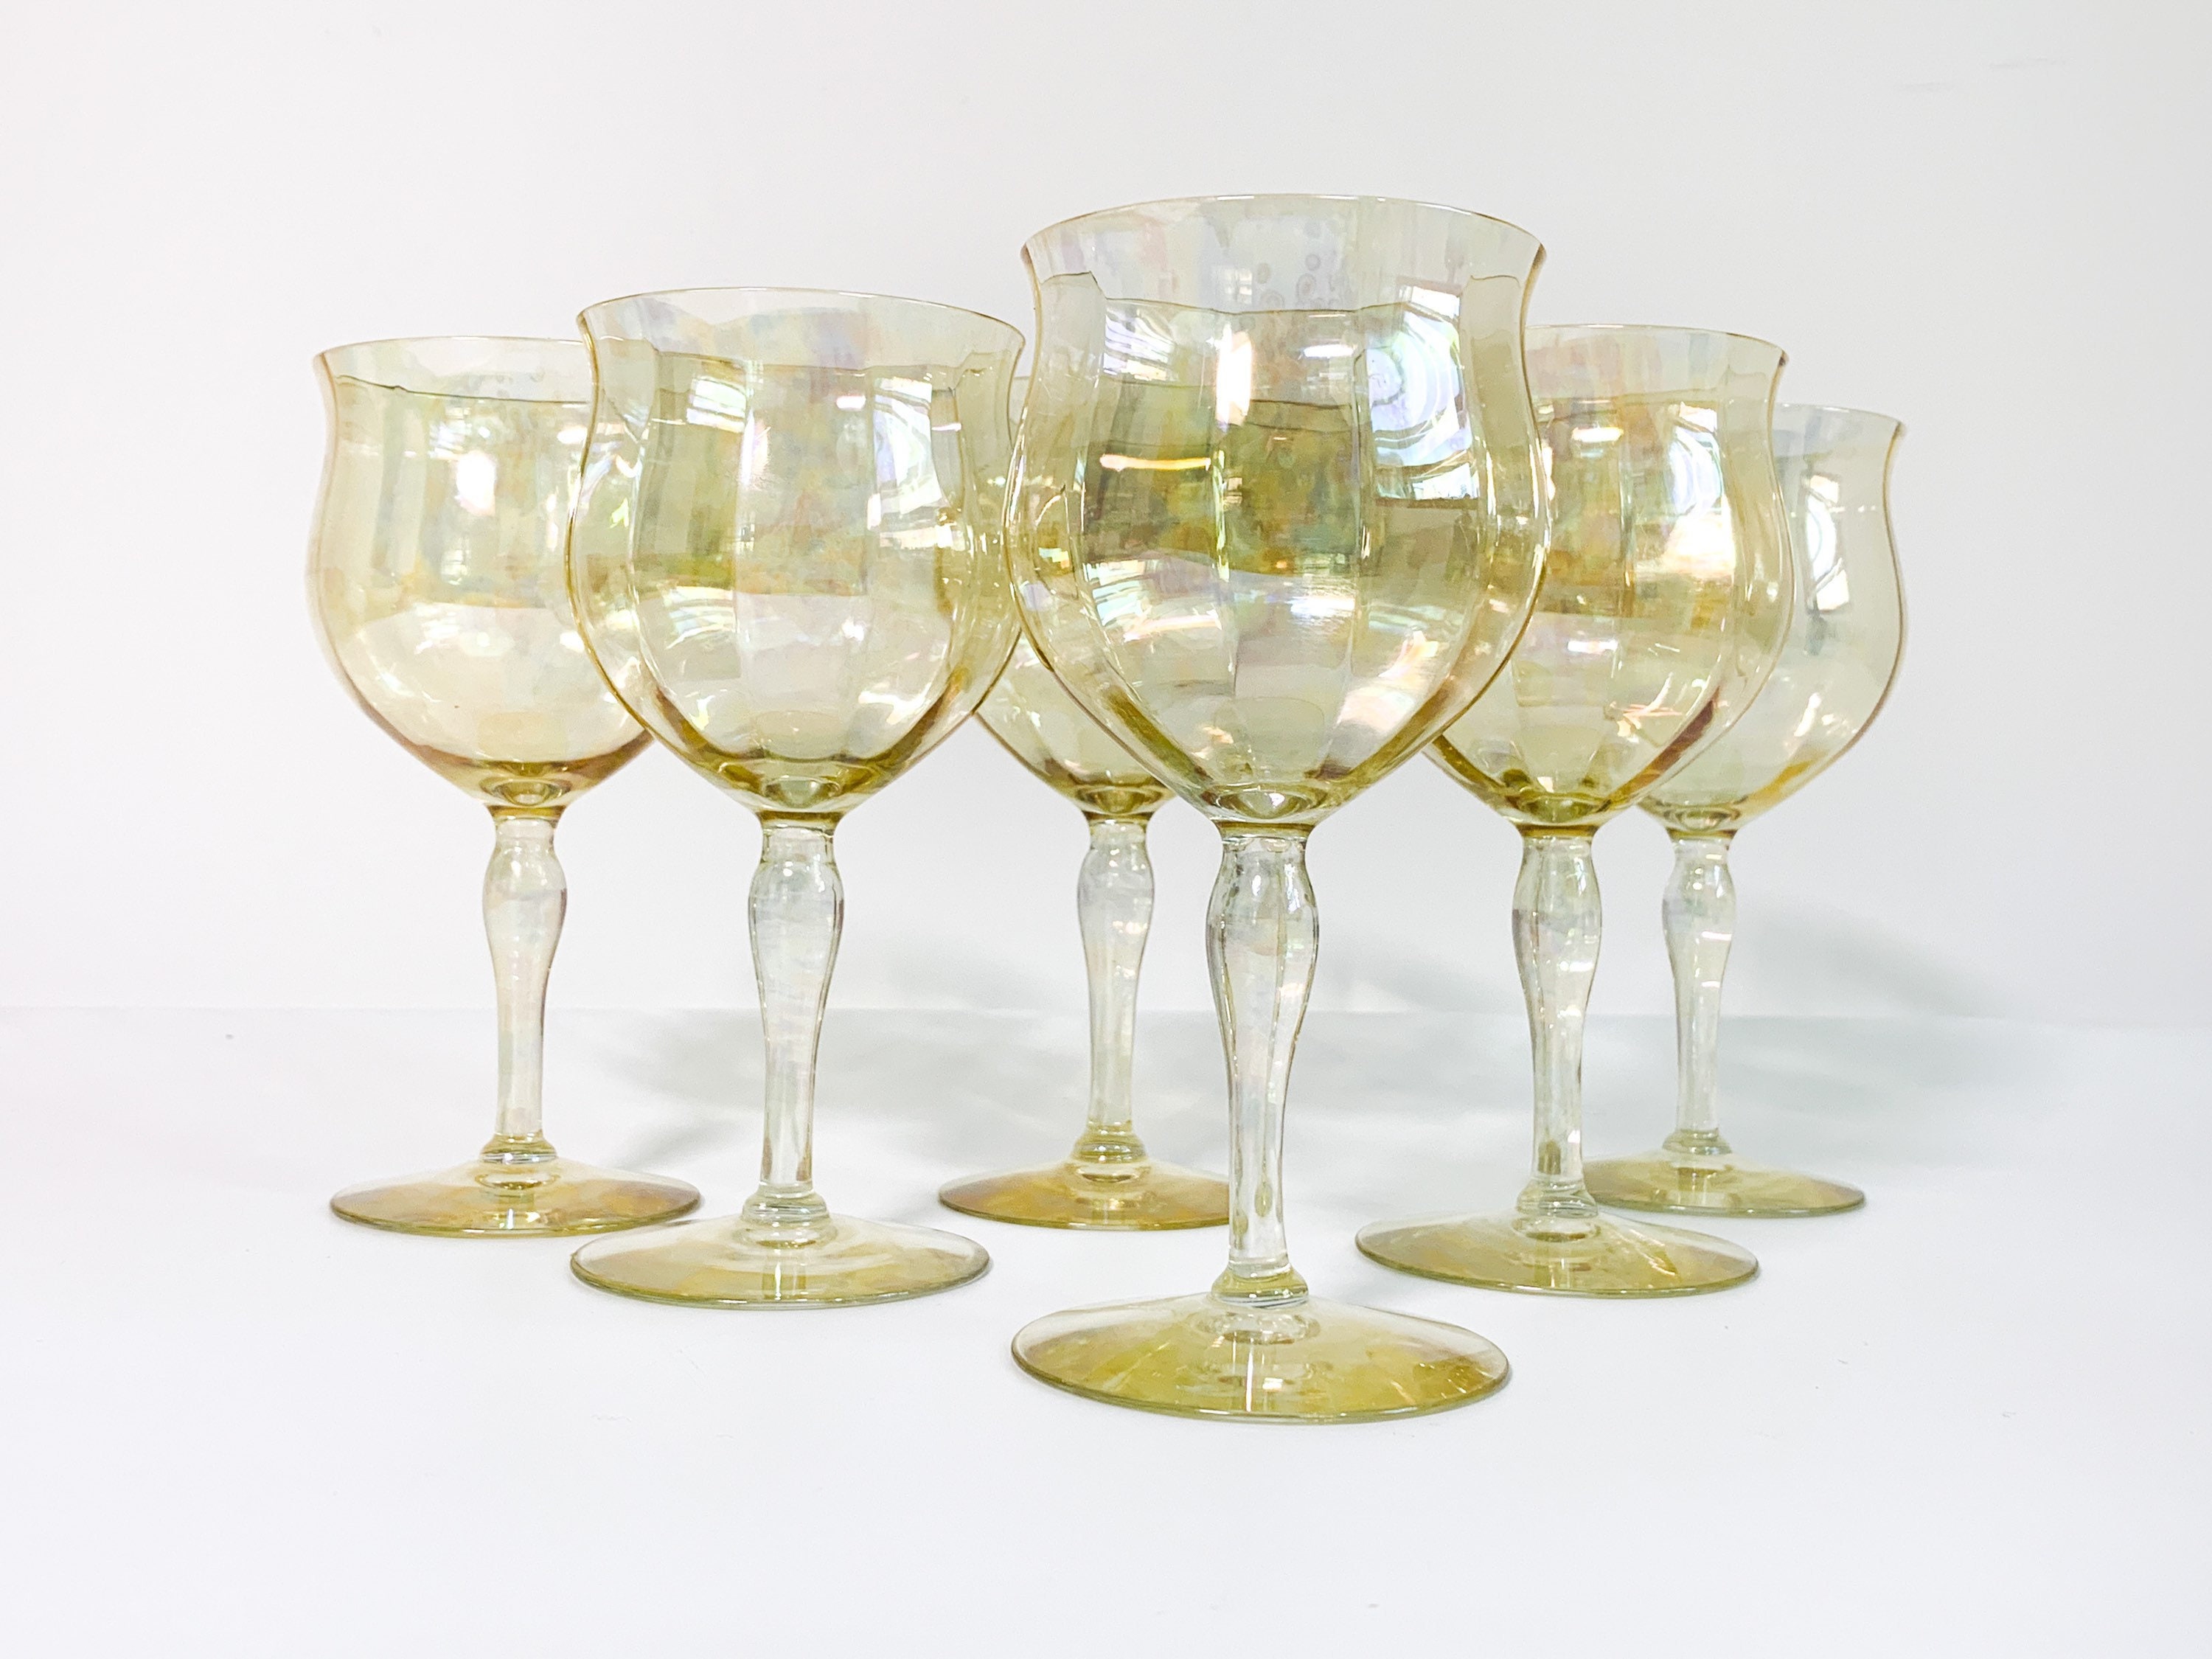 Set of 6 Light Peach Pantone Color Wine Glasses